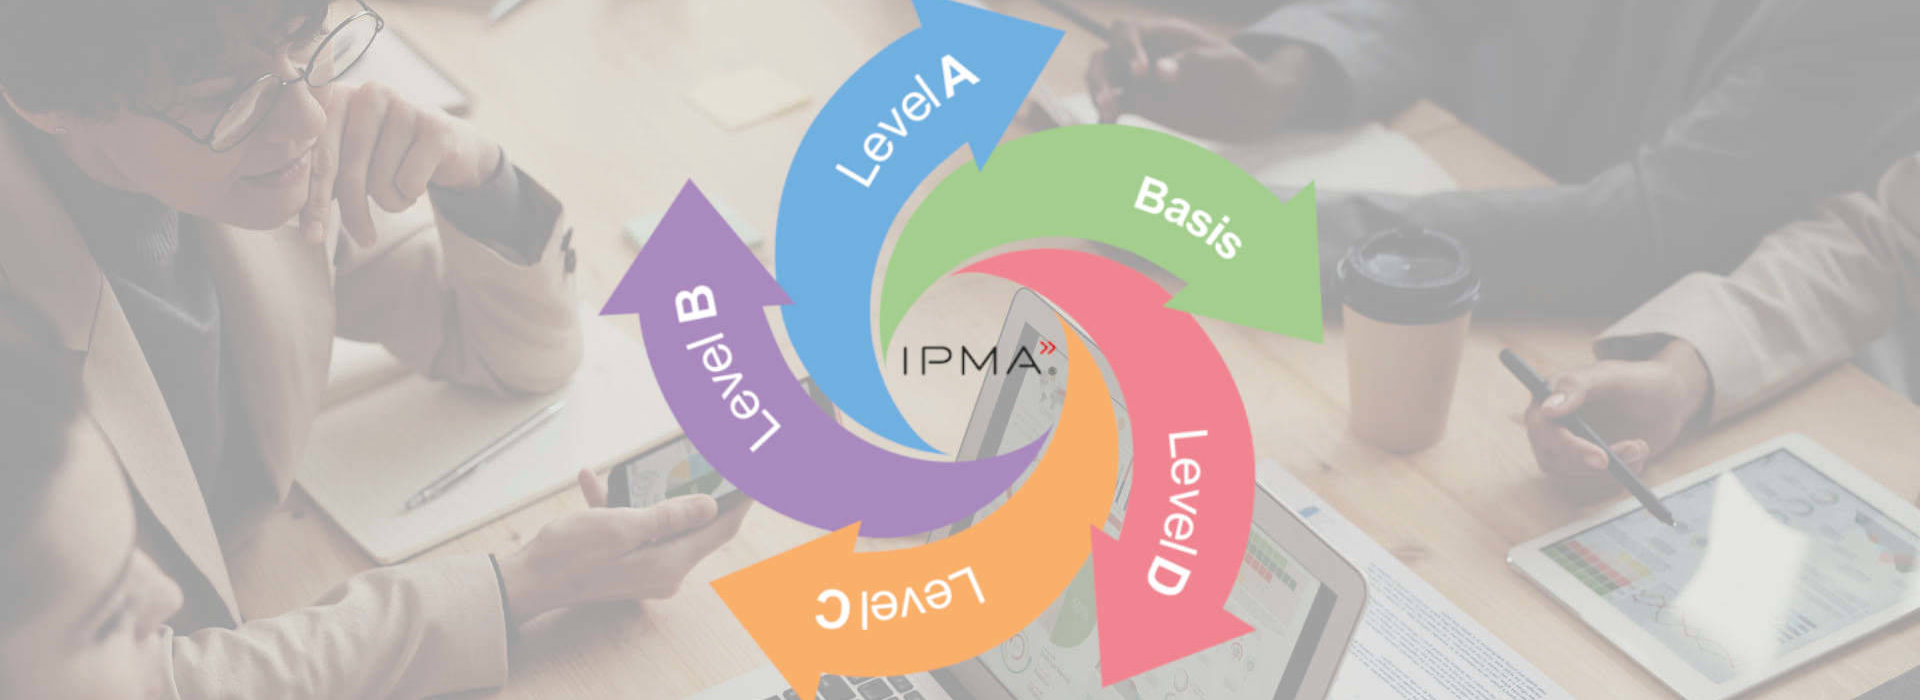 IPMA - Projektmanagement